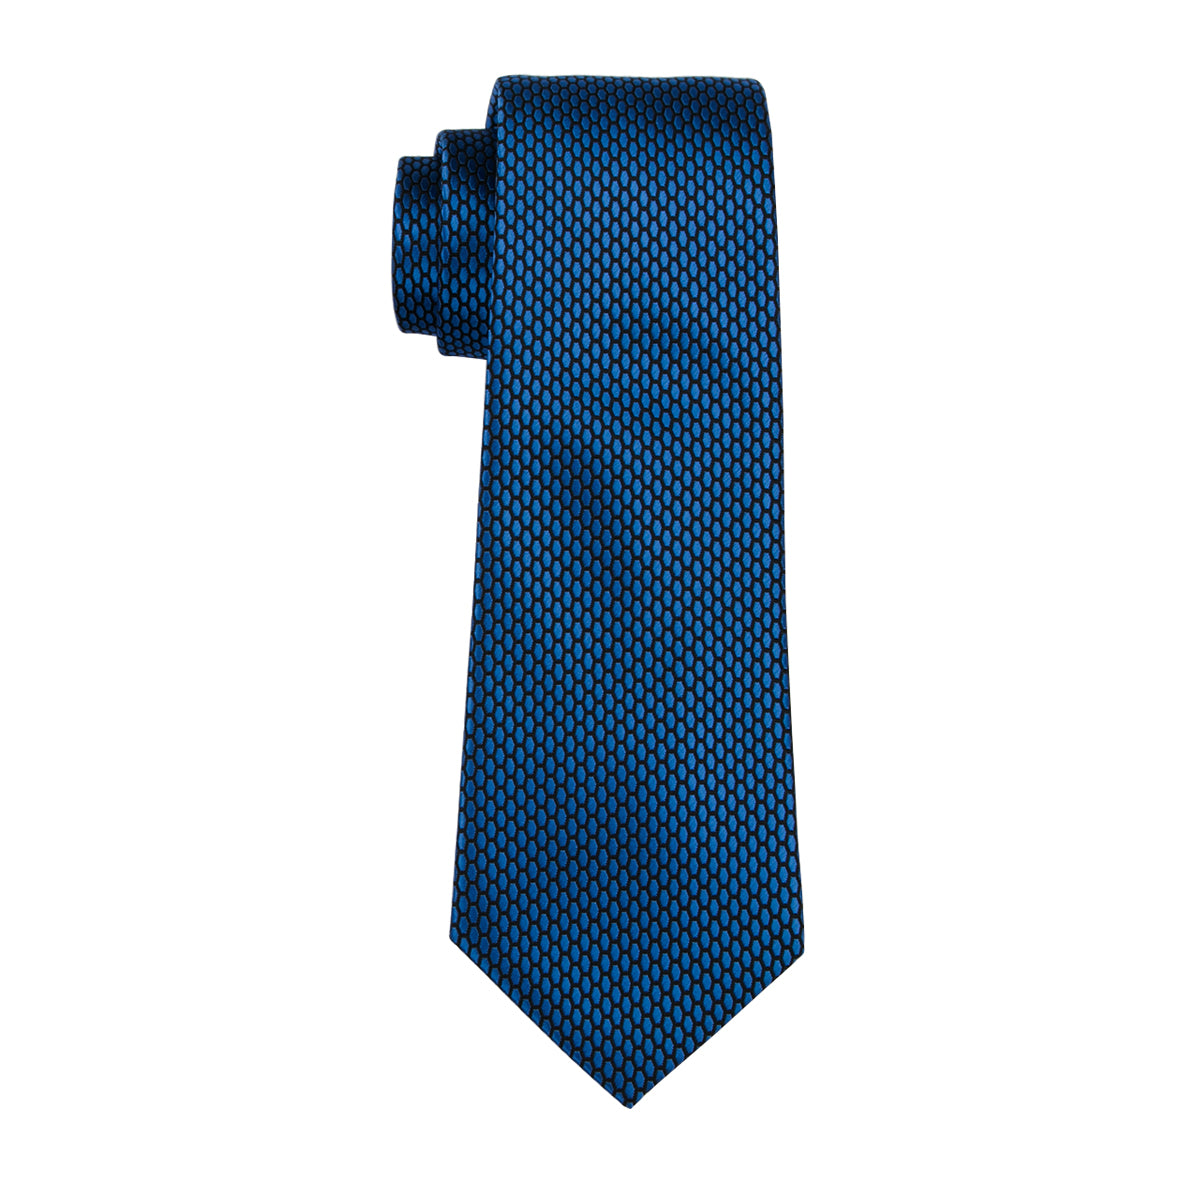 Navy-Blue Geometric Polka Dot Tie Pocket Square Cufflinks Set – ties2you